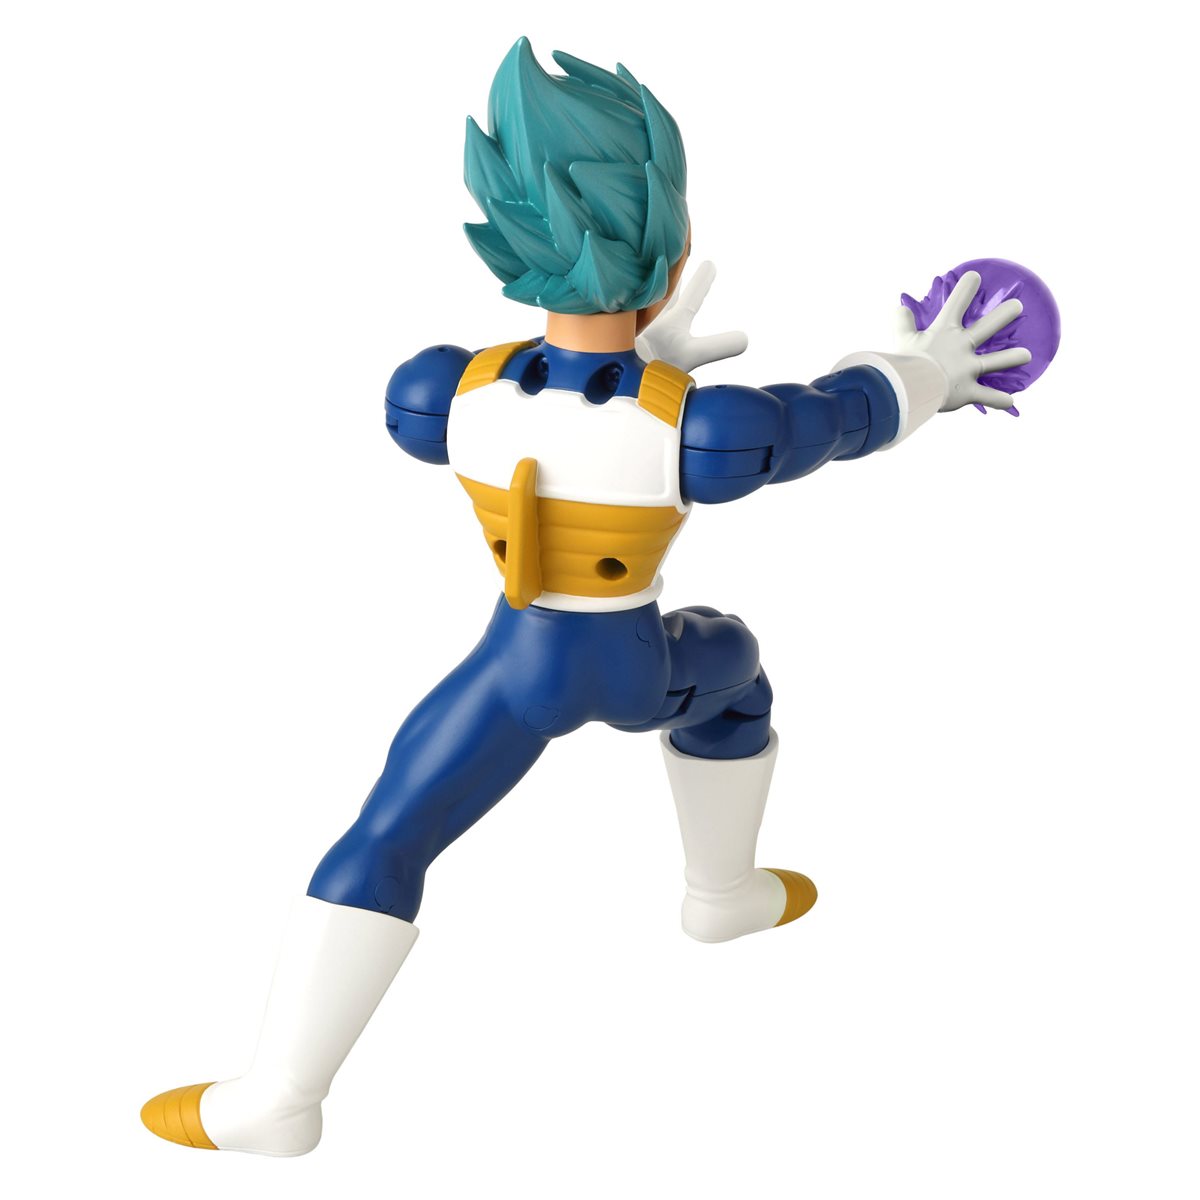 Dragon Ball Attack Super Saiyan Blue Goku 7-Inch Action Figure